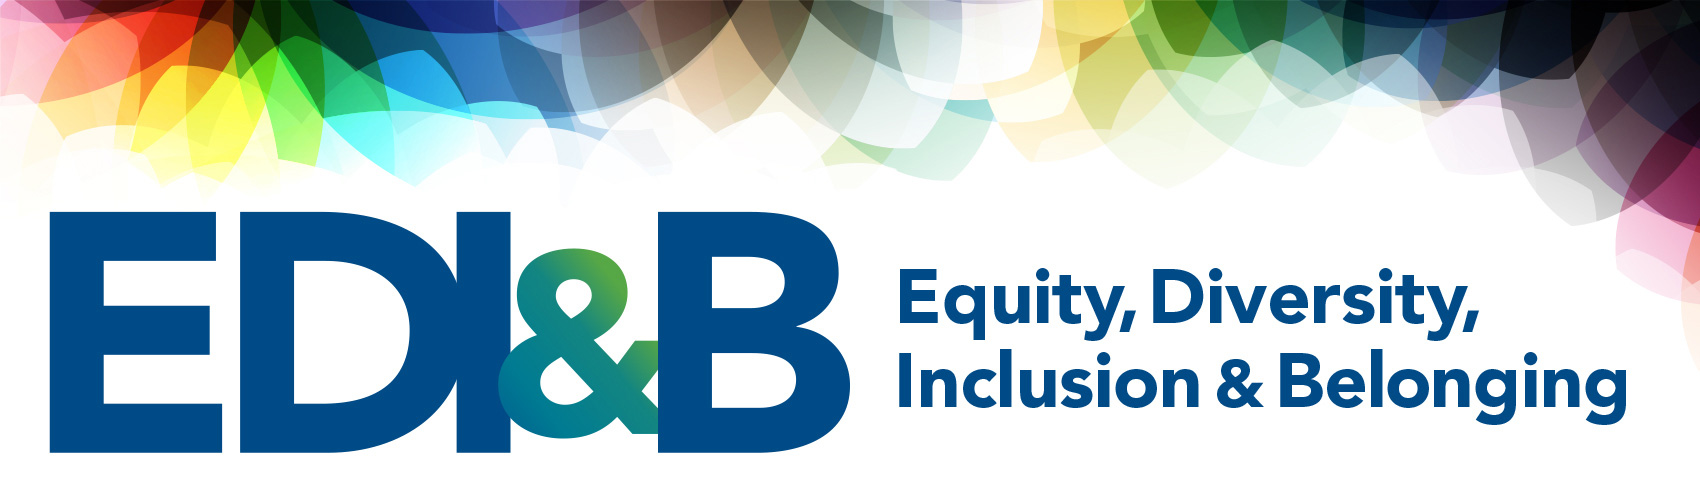 Equity, Diversity, Inclusion & Belonging (EDI&B)